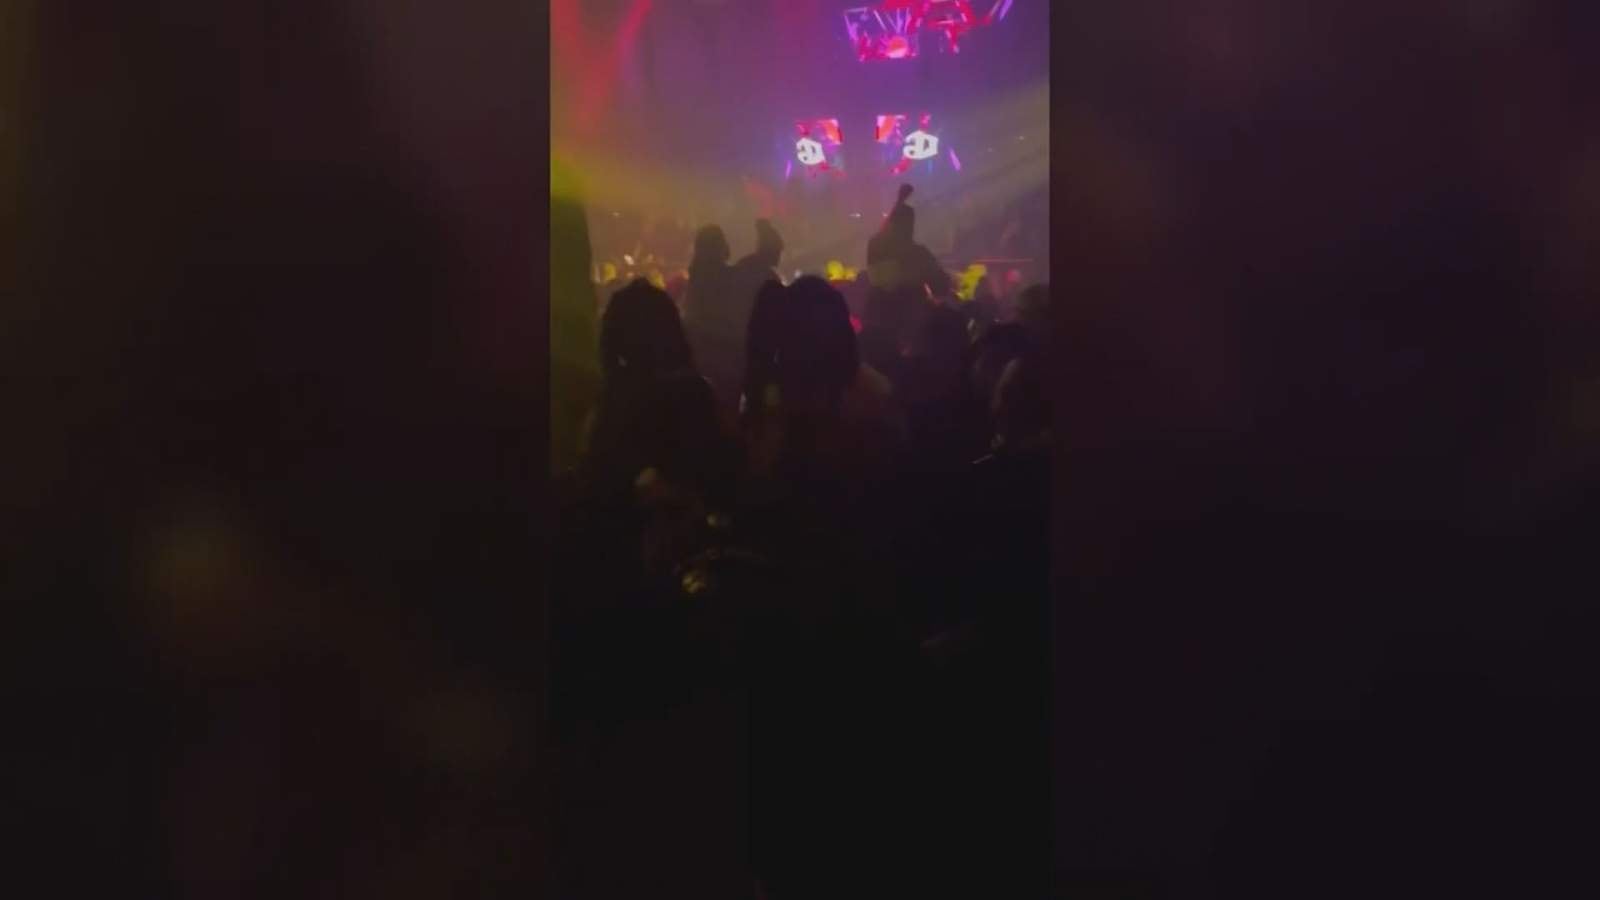 Crowded Houston nightclub evacuated over ‘life-safety concern’